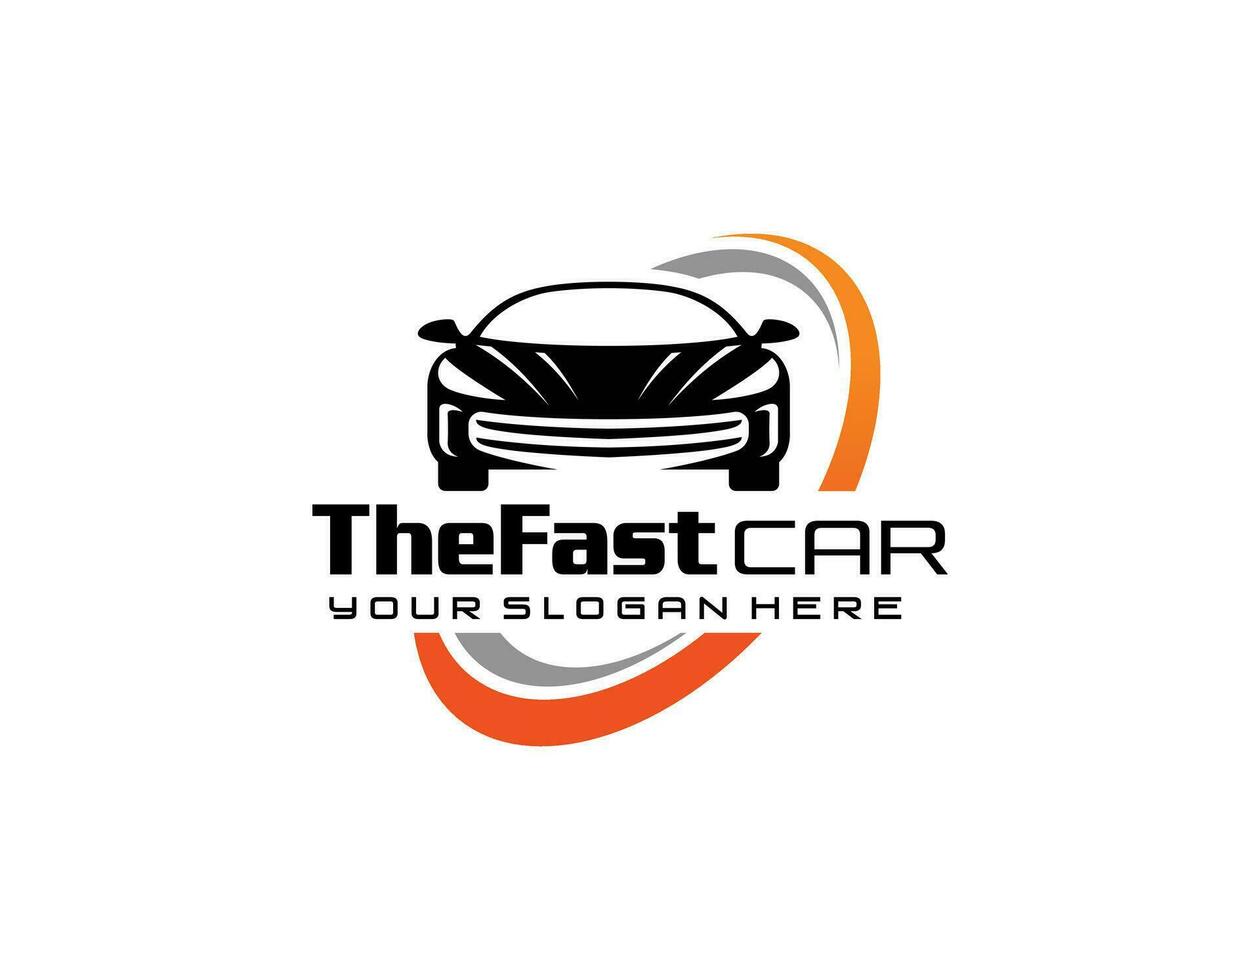 Sports car logo silhouette set. Motor vehicle dealership emblem. Auto garage symbol. Showroom dealer icon. Vector illustration.